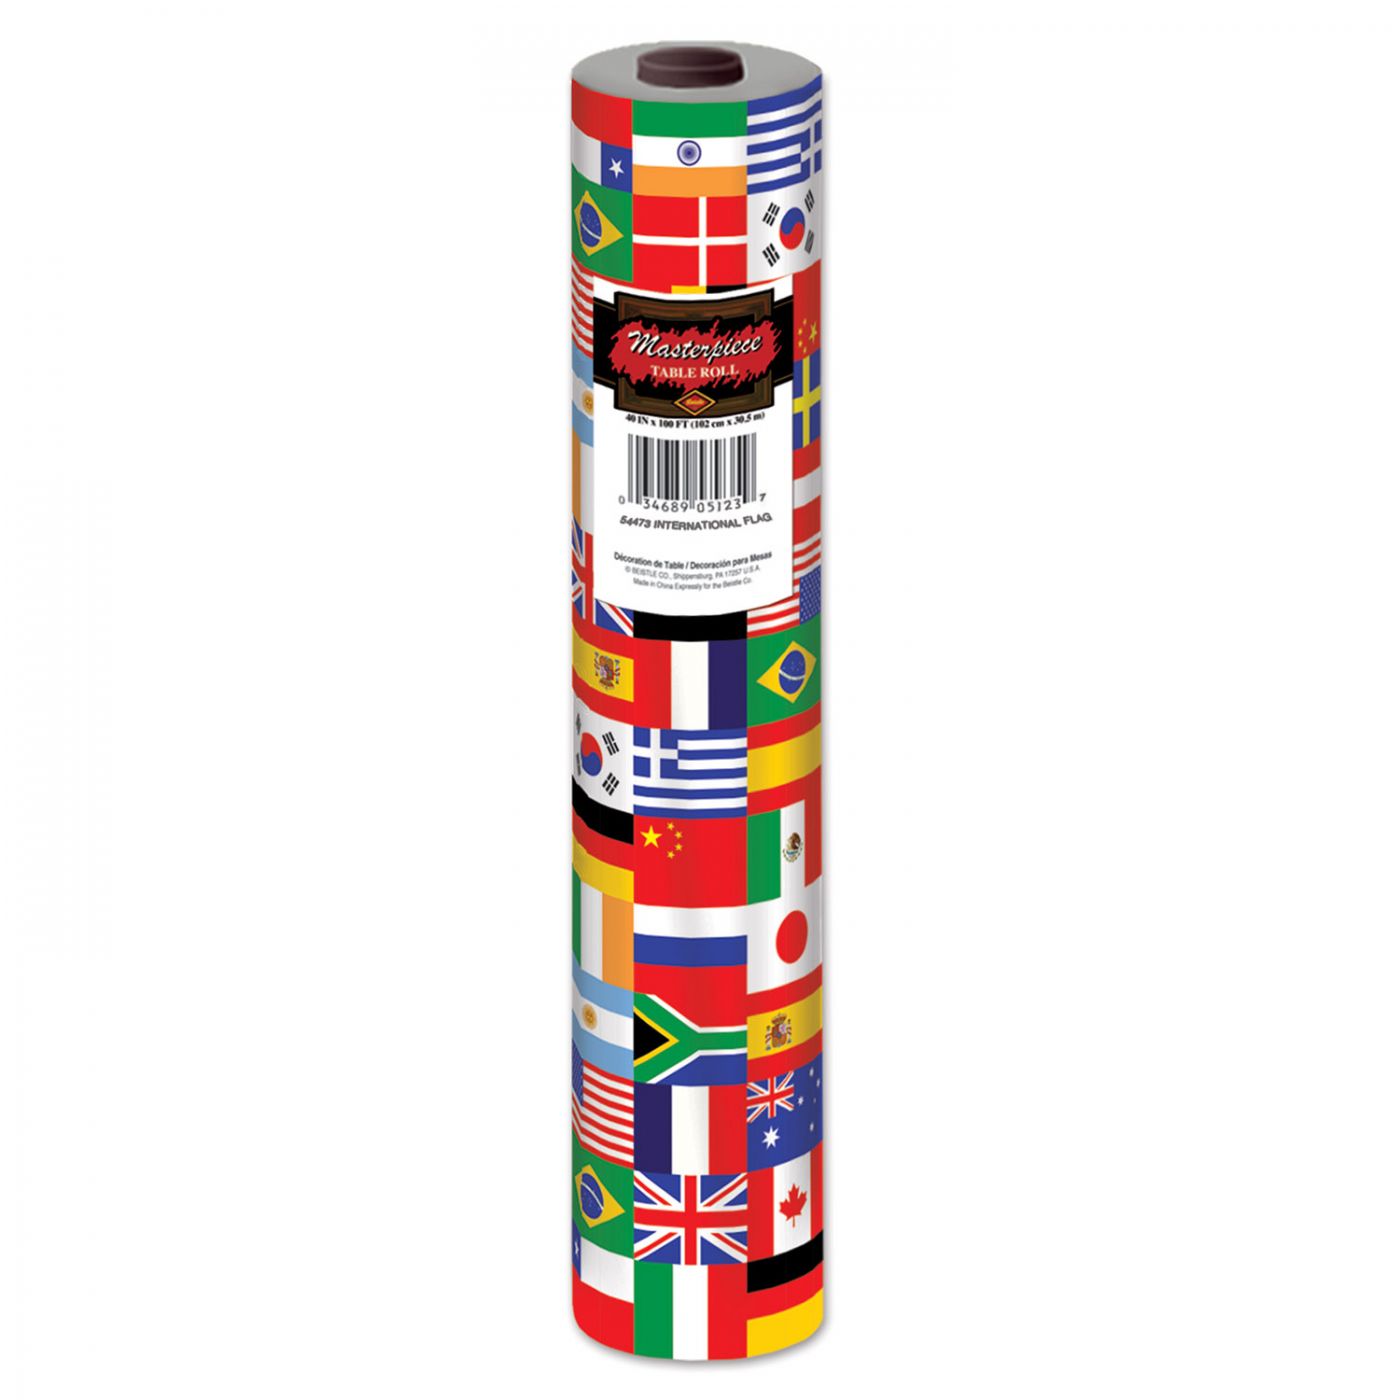 International Flag Table Roll (1) image